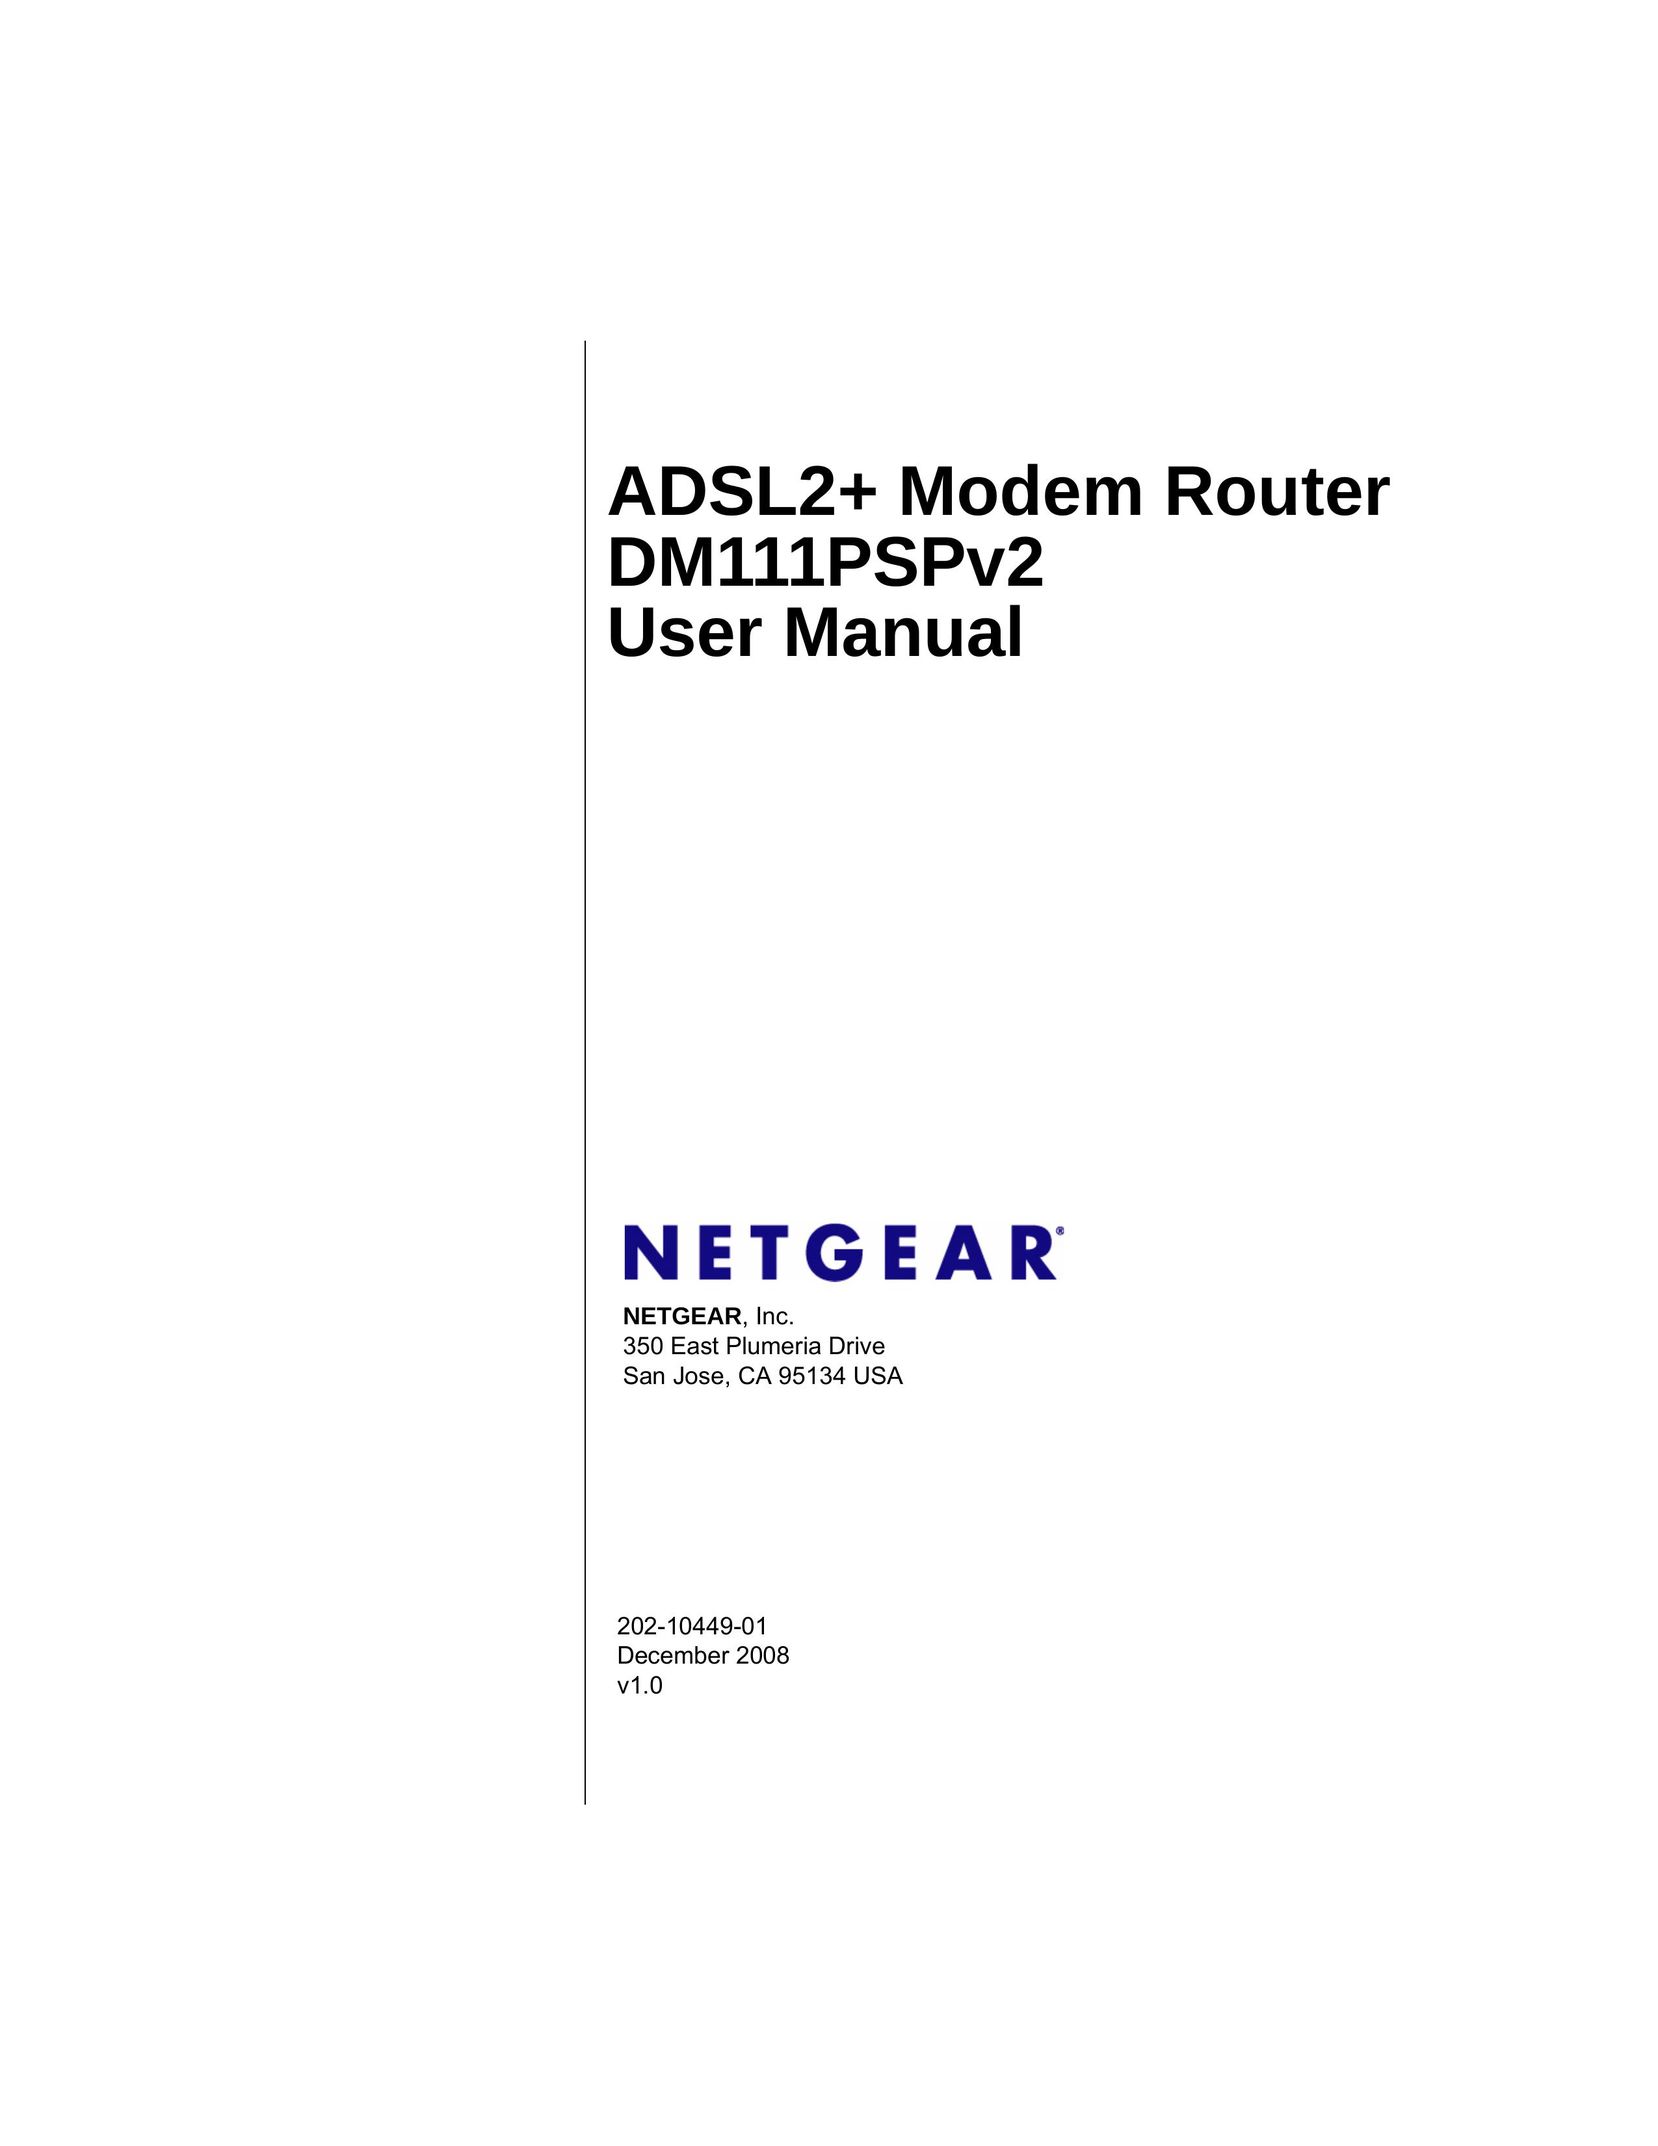 NETGEAR DM111PSPv2 Modem User Manual